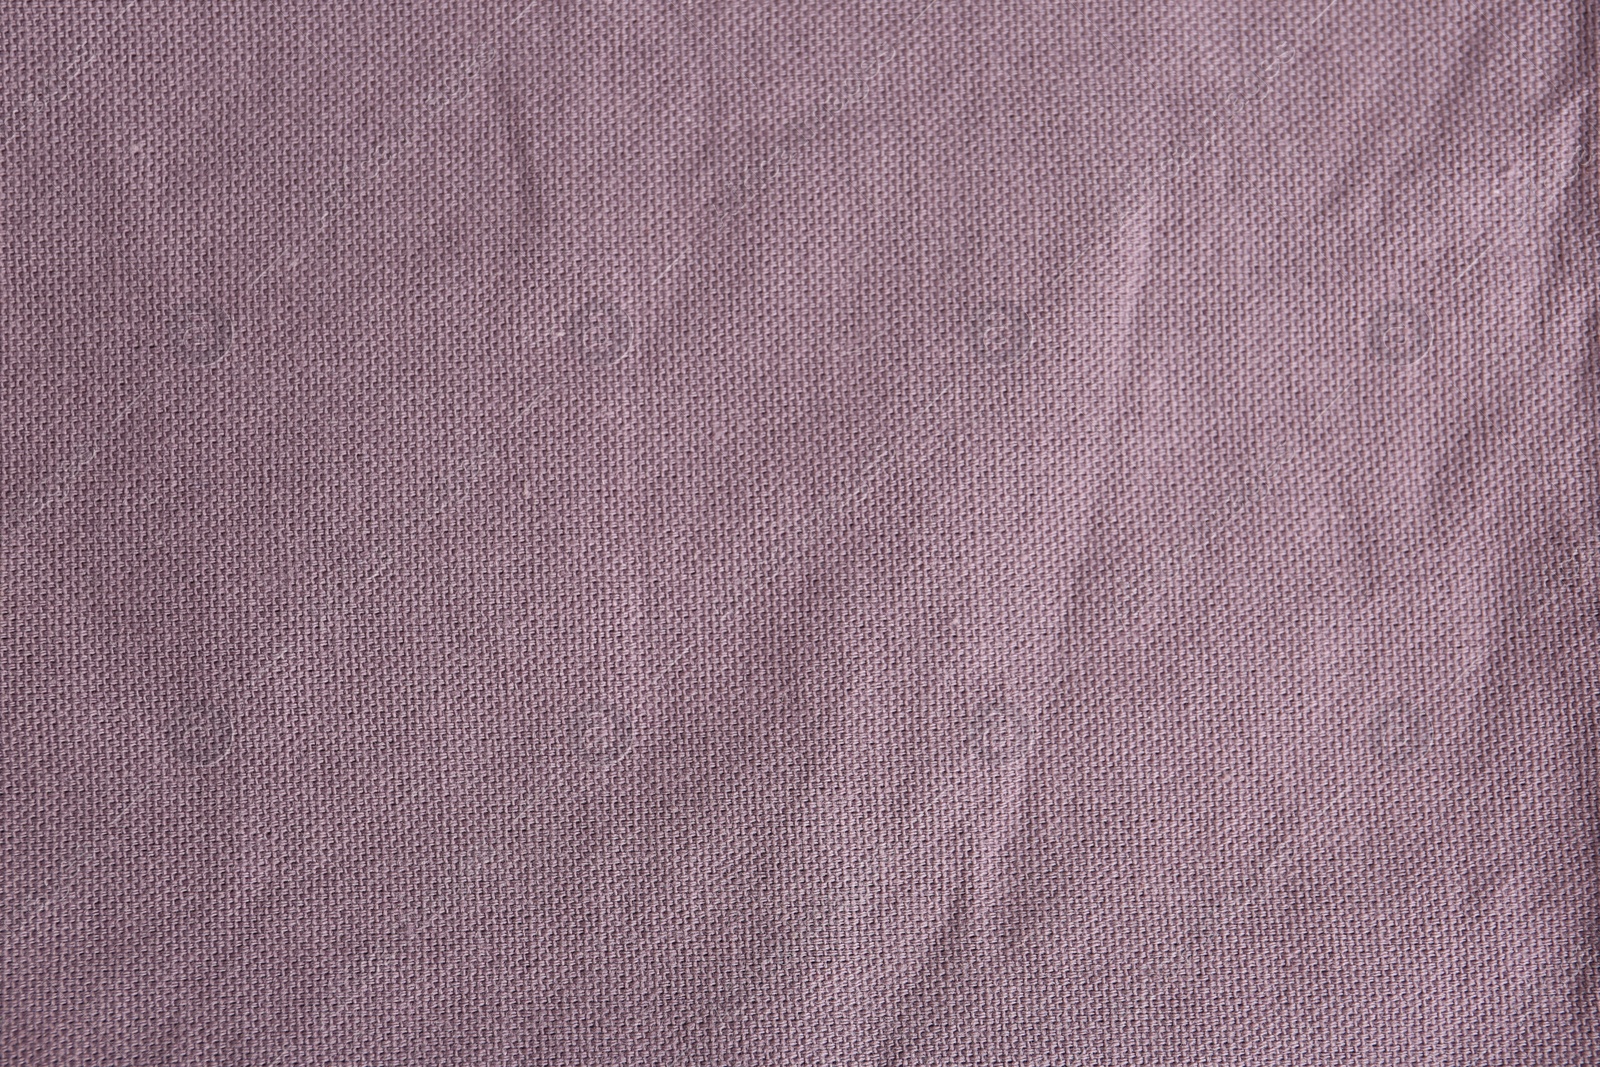 Photo of Texture of beautiful light purple fabric as background, closeup